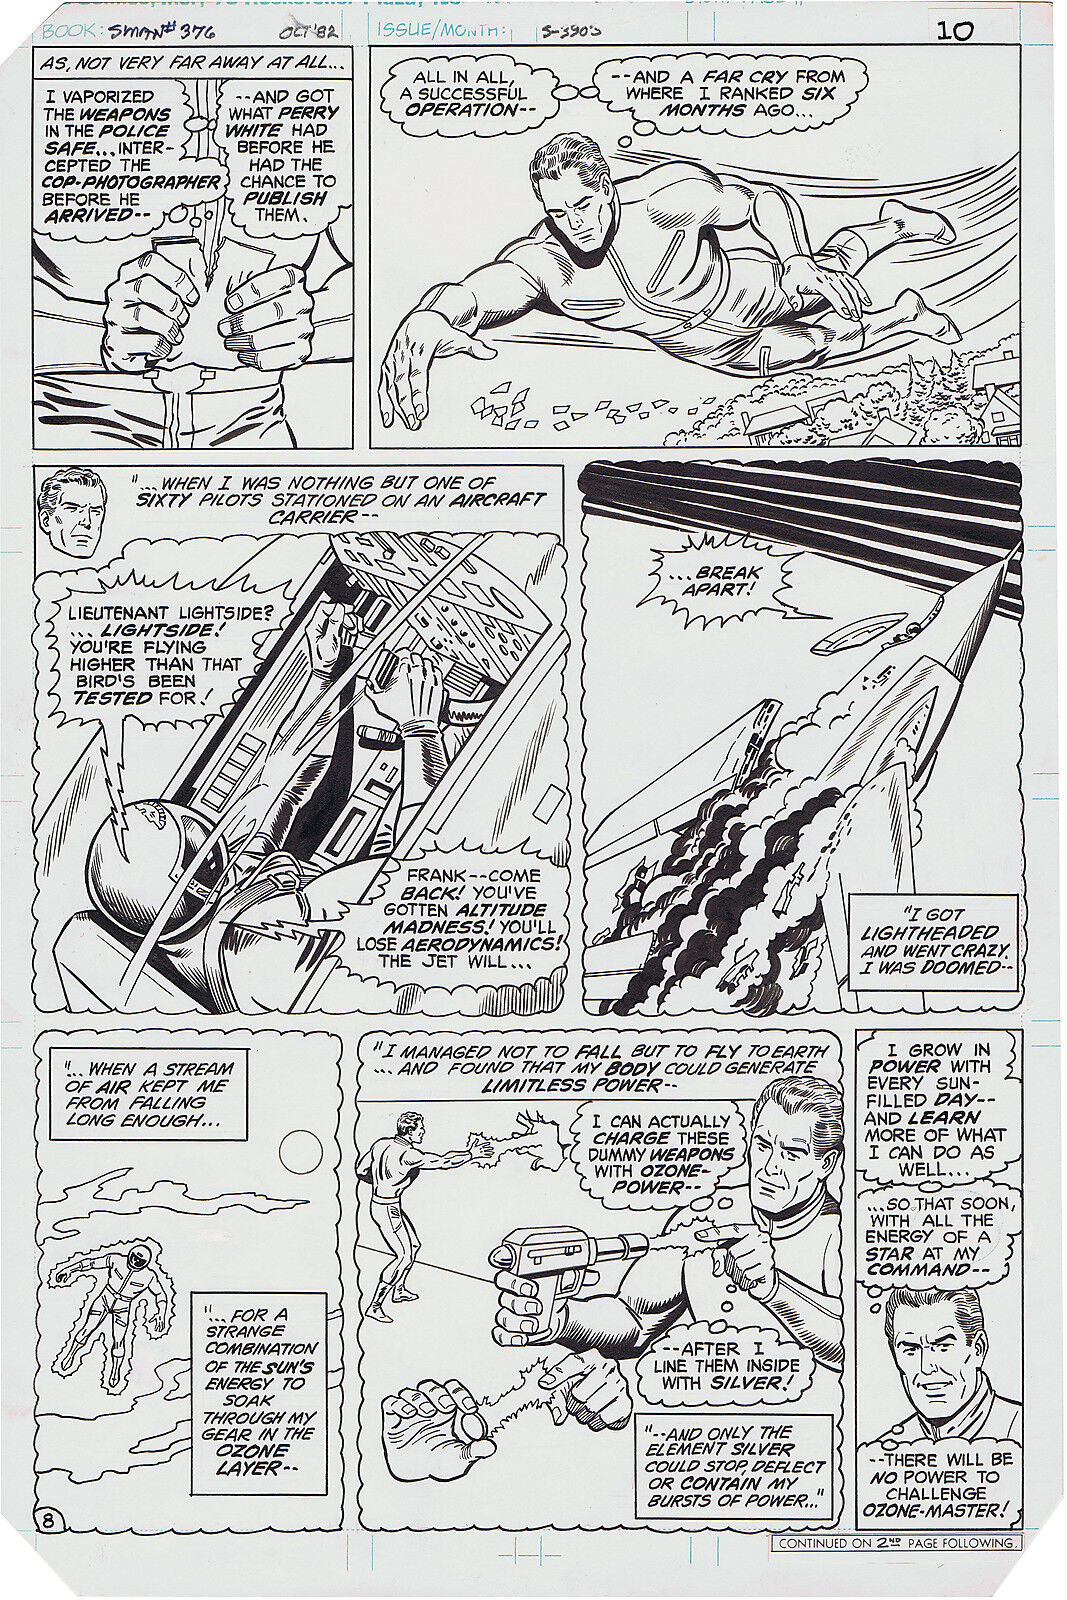 ORIGINAL ART Page, Superman #376 p. 8/10, Curt Swan, 1982, DC, 1st Ozone-Master